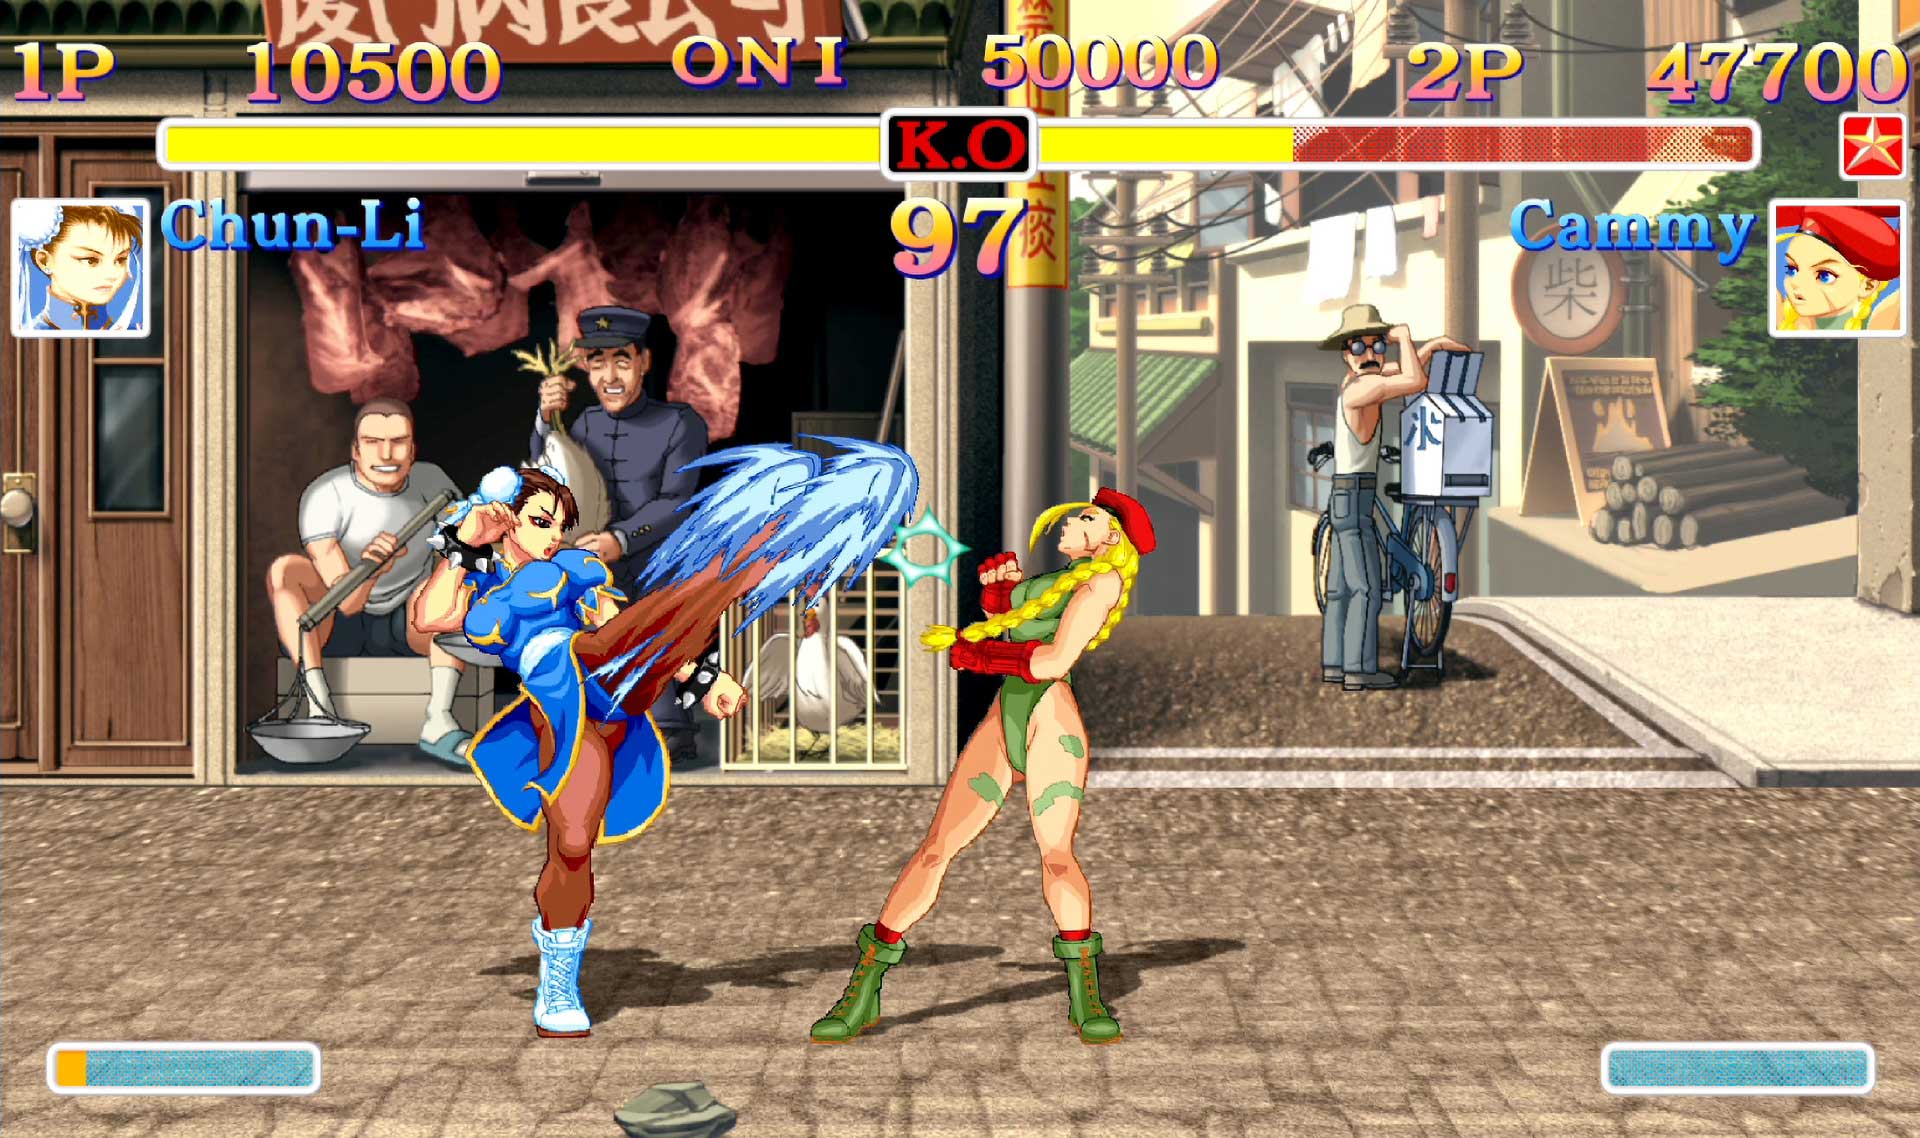 Jogo Street Fighter Ultra 2 para Nintendo Switch